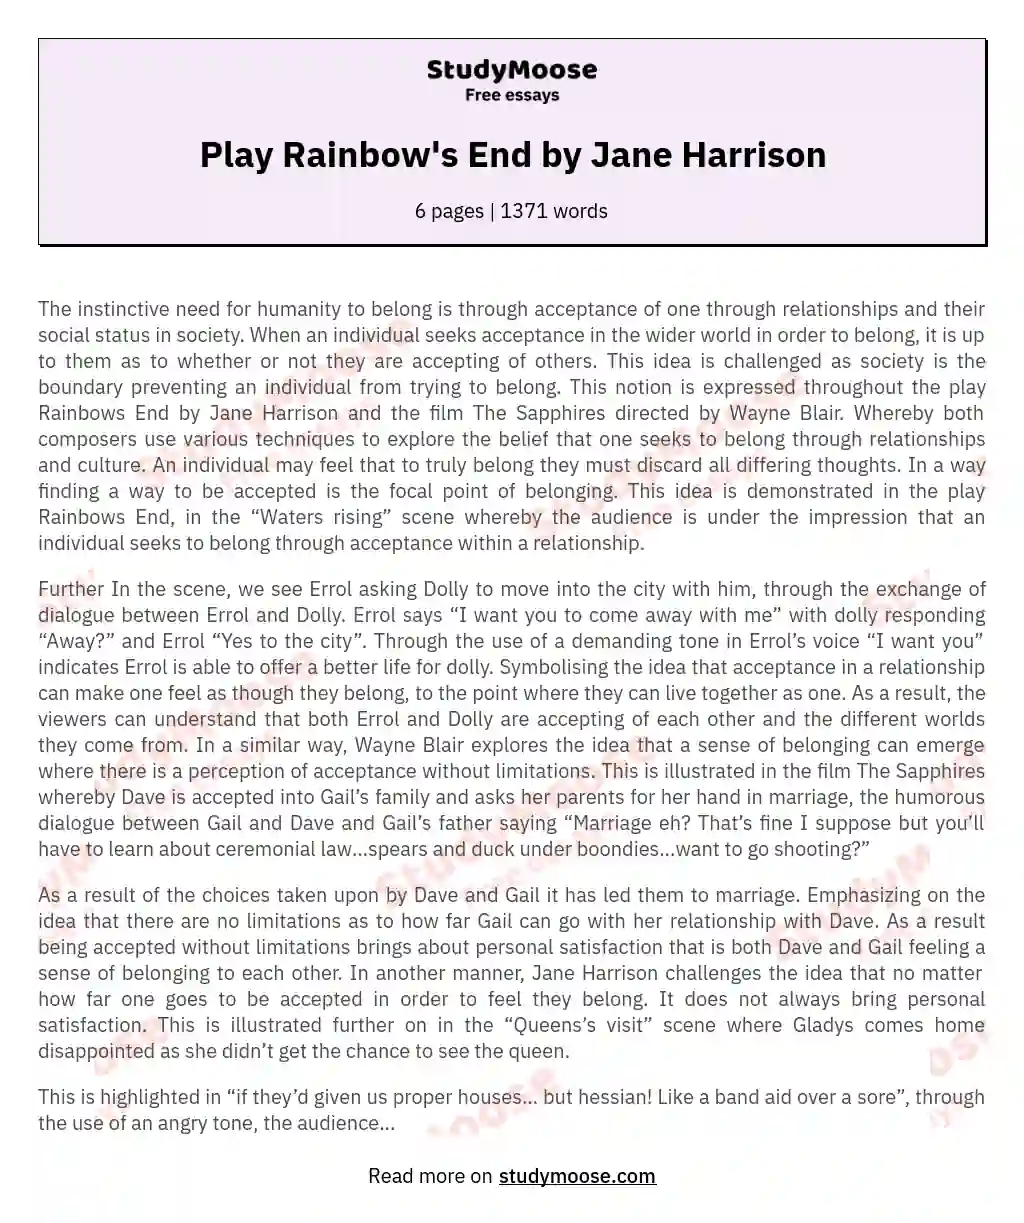 Play Rainbow's End by Jane Harrison essay